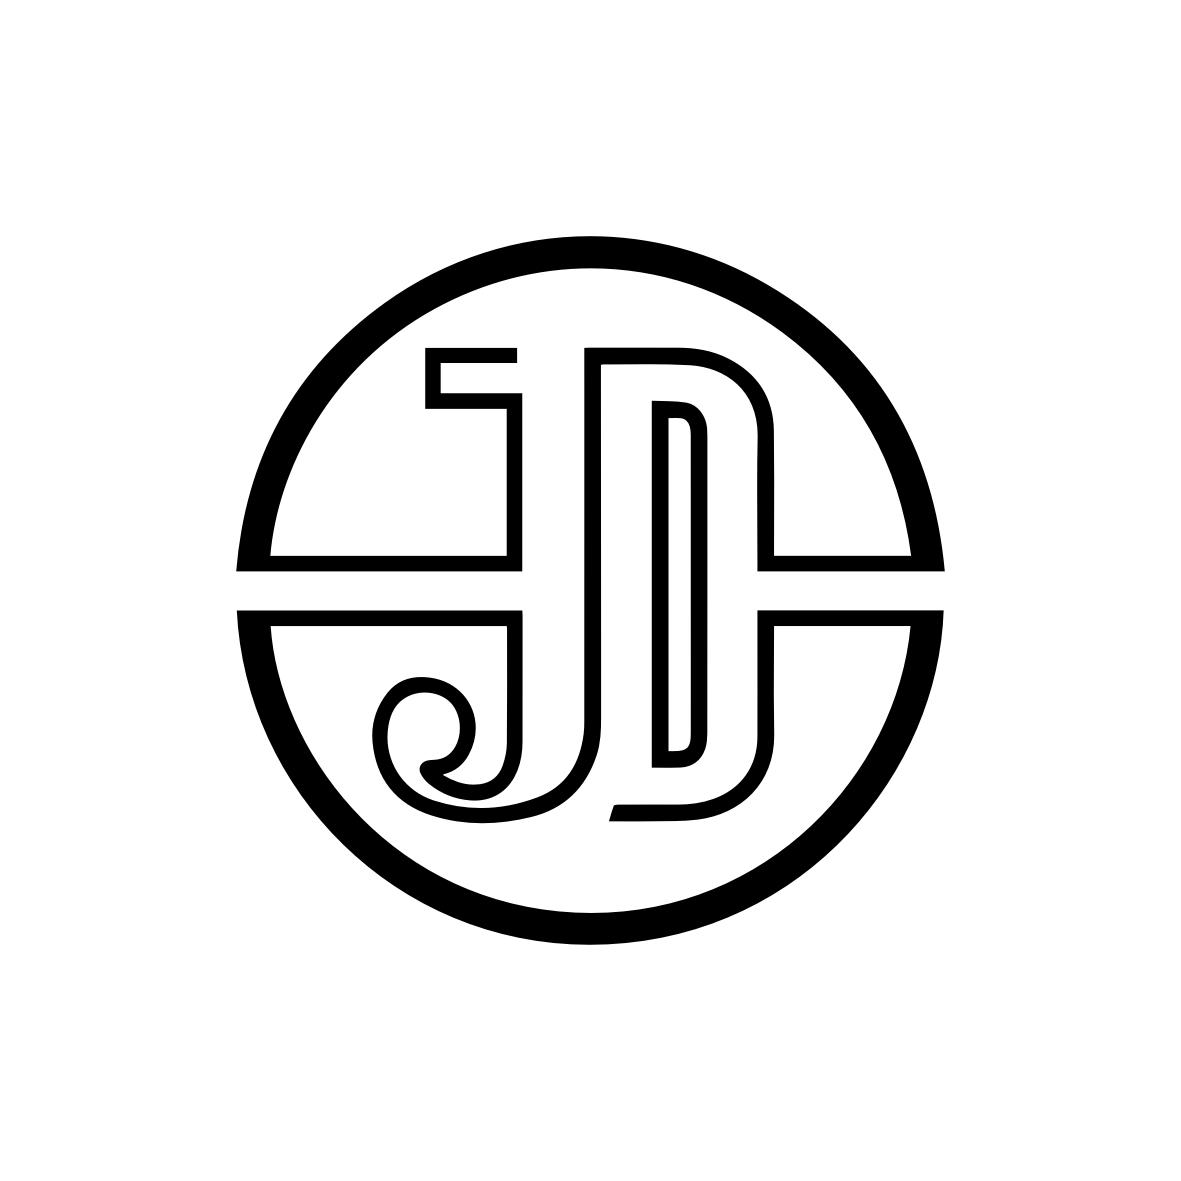 jd字母设计图片